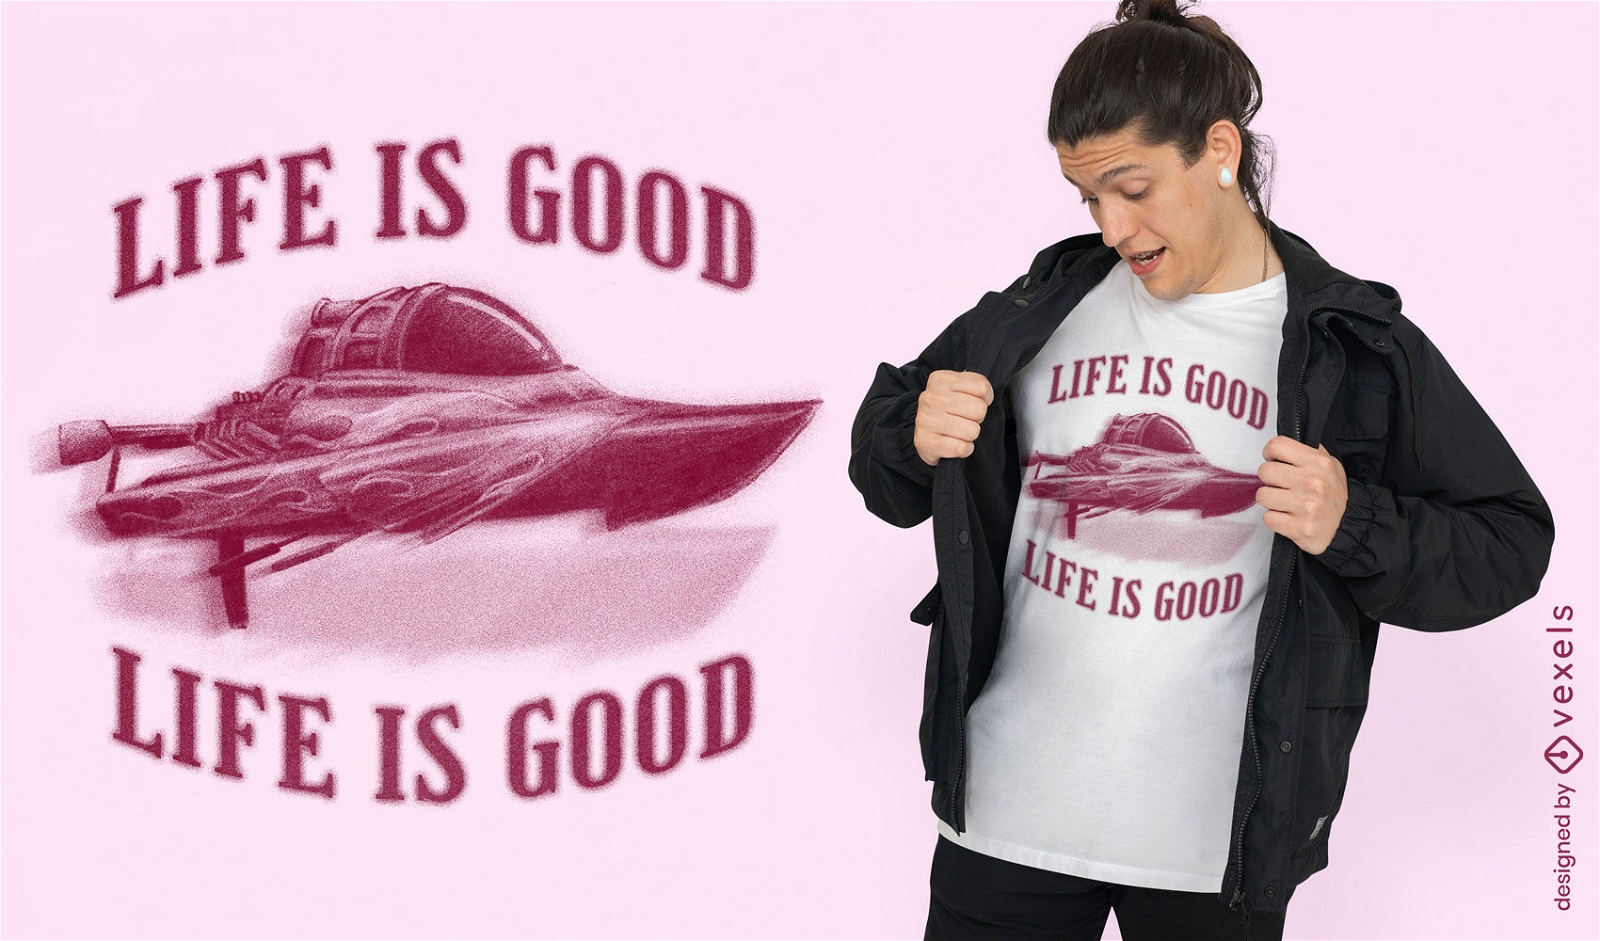 La vida es un buen dise?o de camiseta de barco de arrastre.